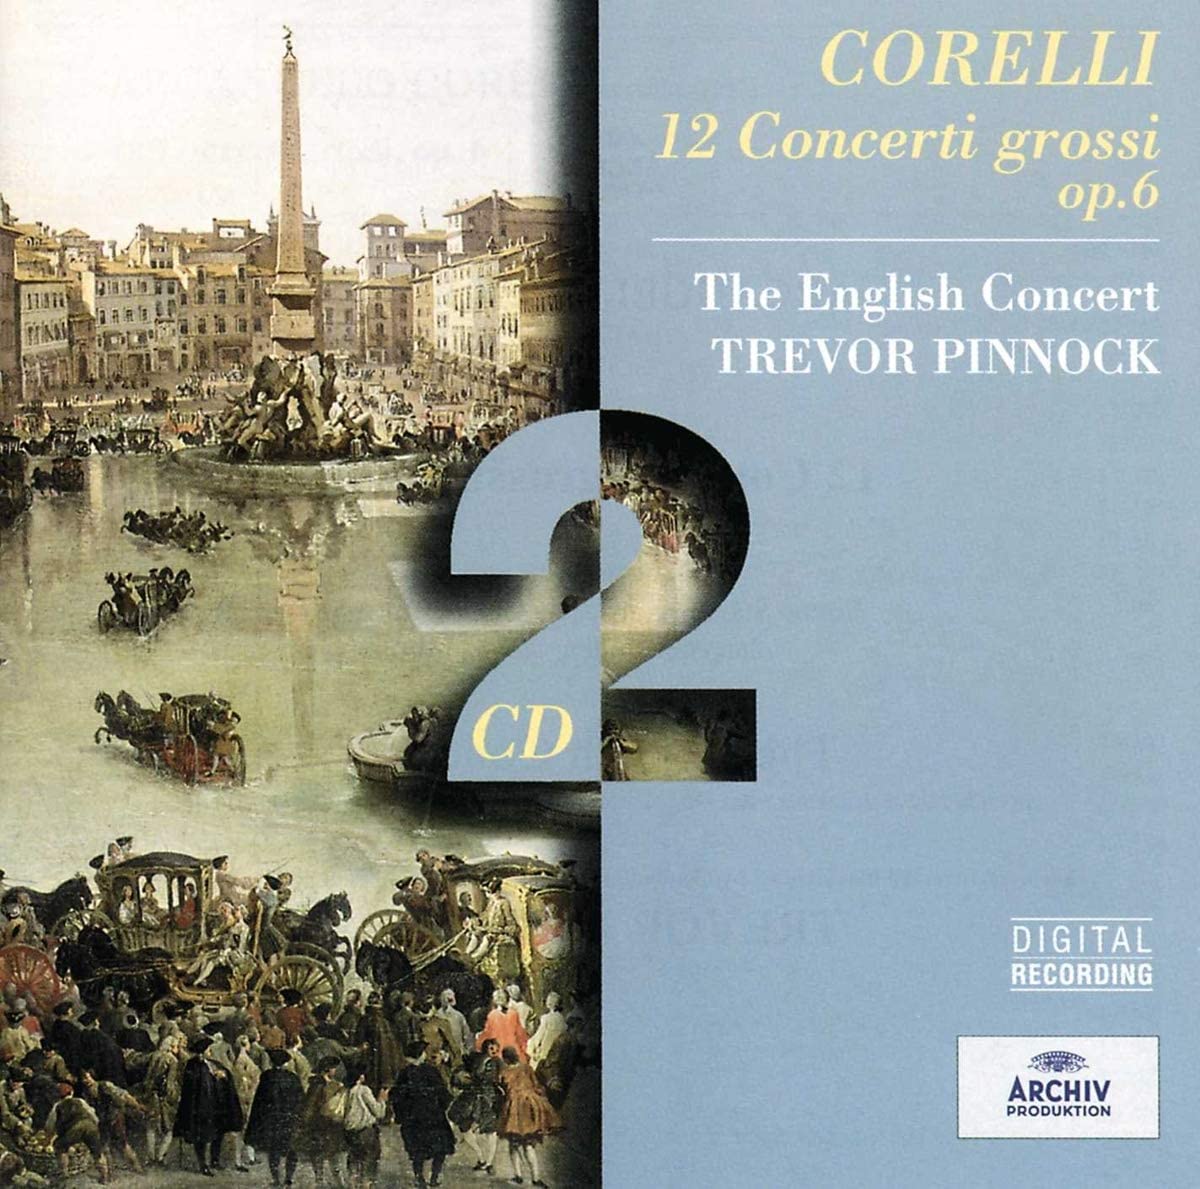 Corelli's Concerti grossi, Op. 6